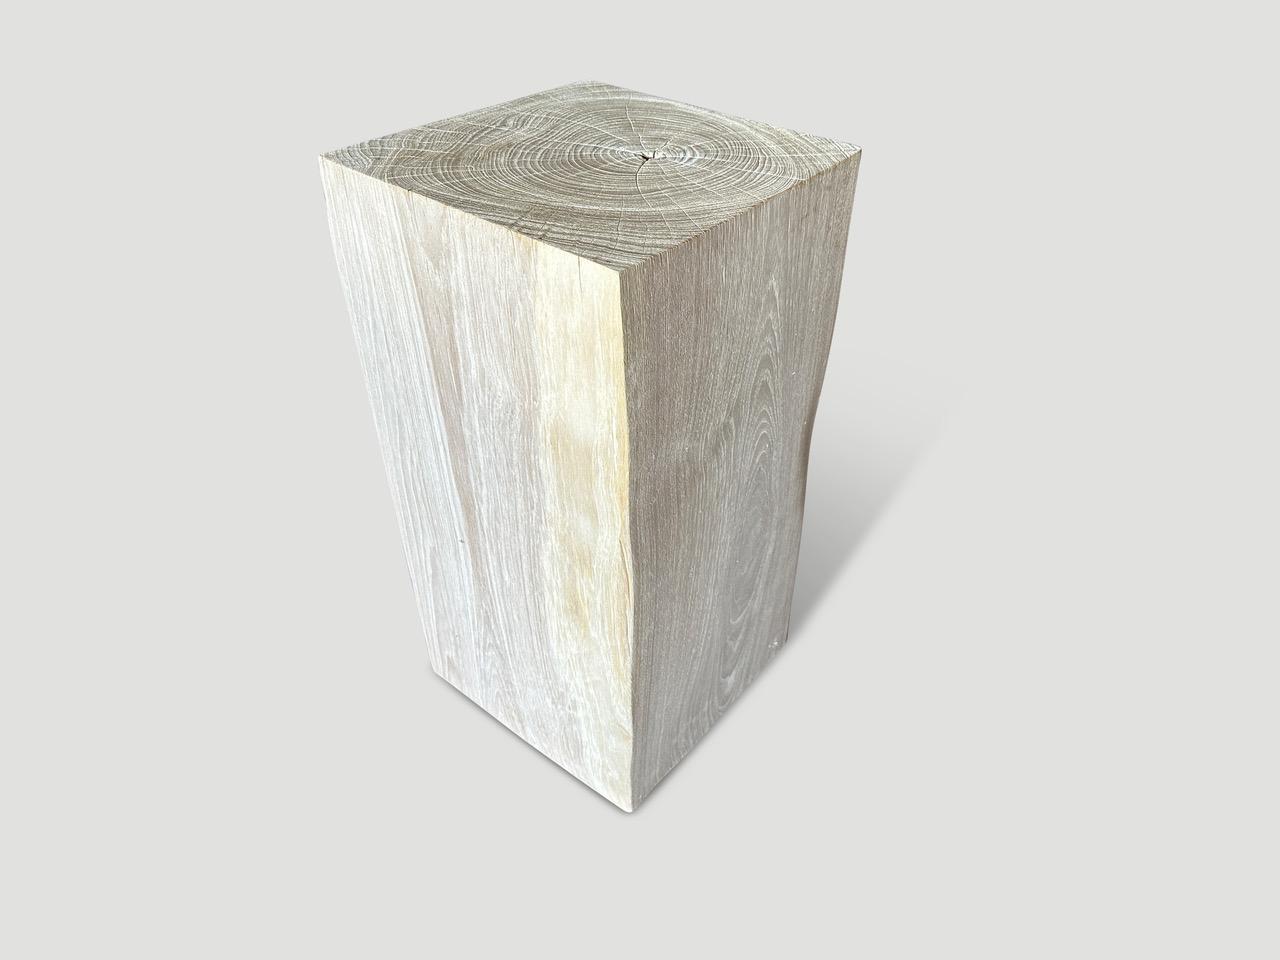 Organic Modern Andrianna Shamaris Minimalist Bleached Teak Wood Side Table or Pedestal For Sale